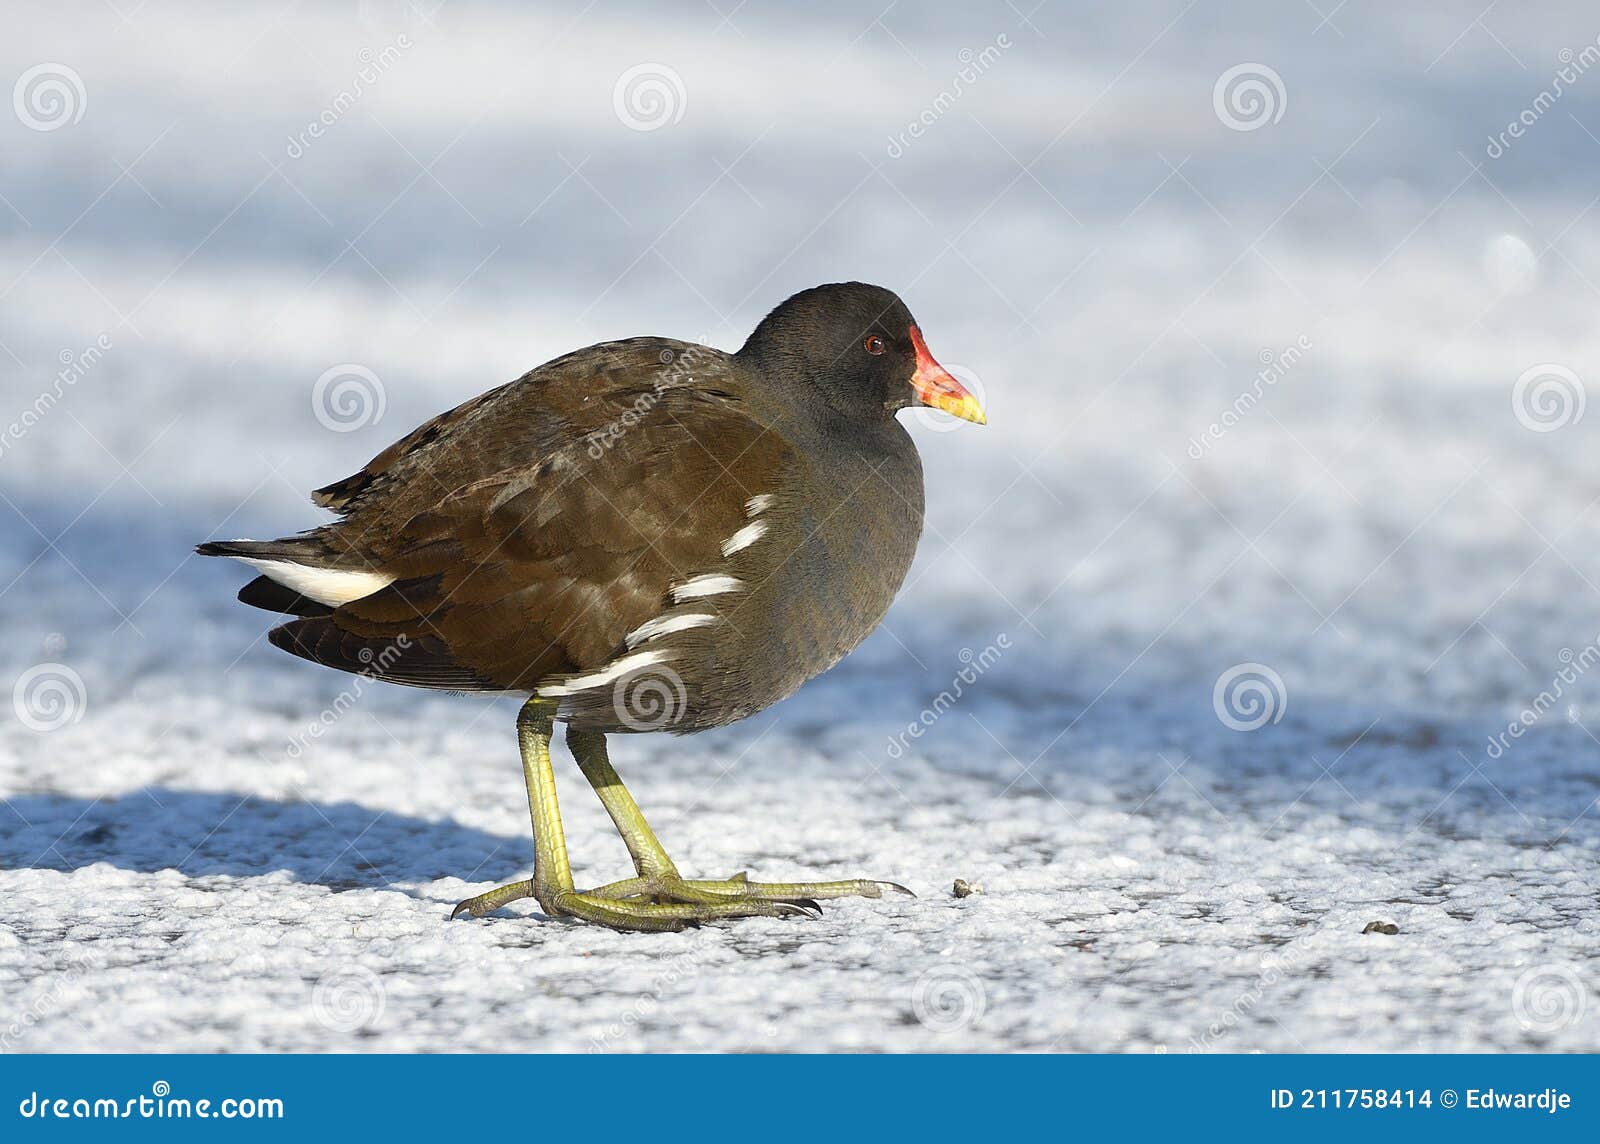 wader bird during wintertime